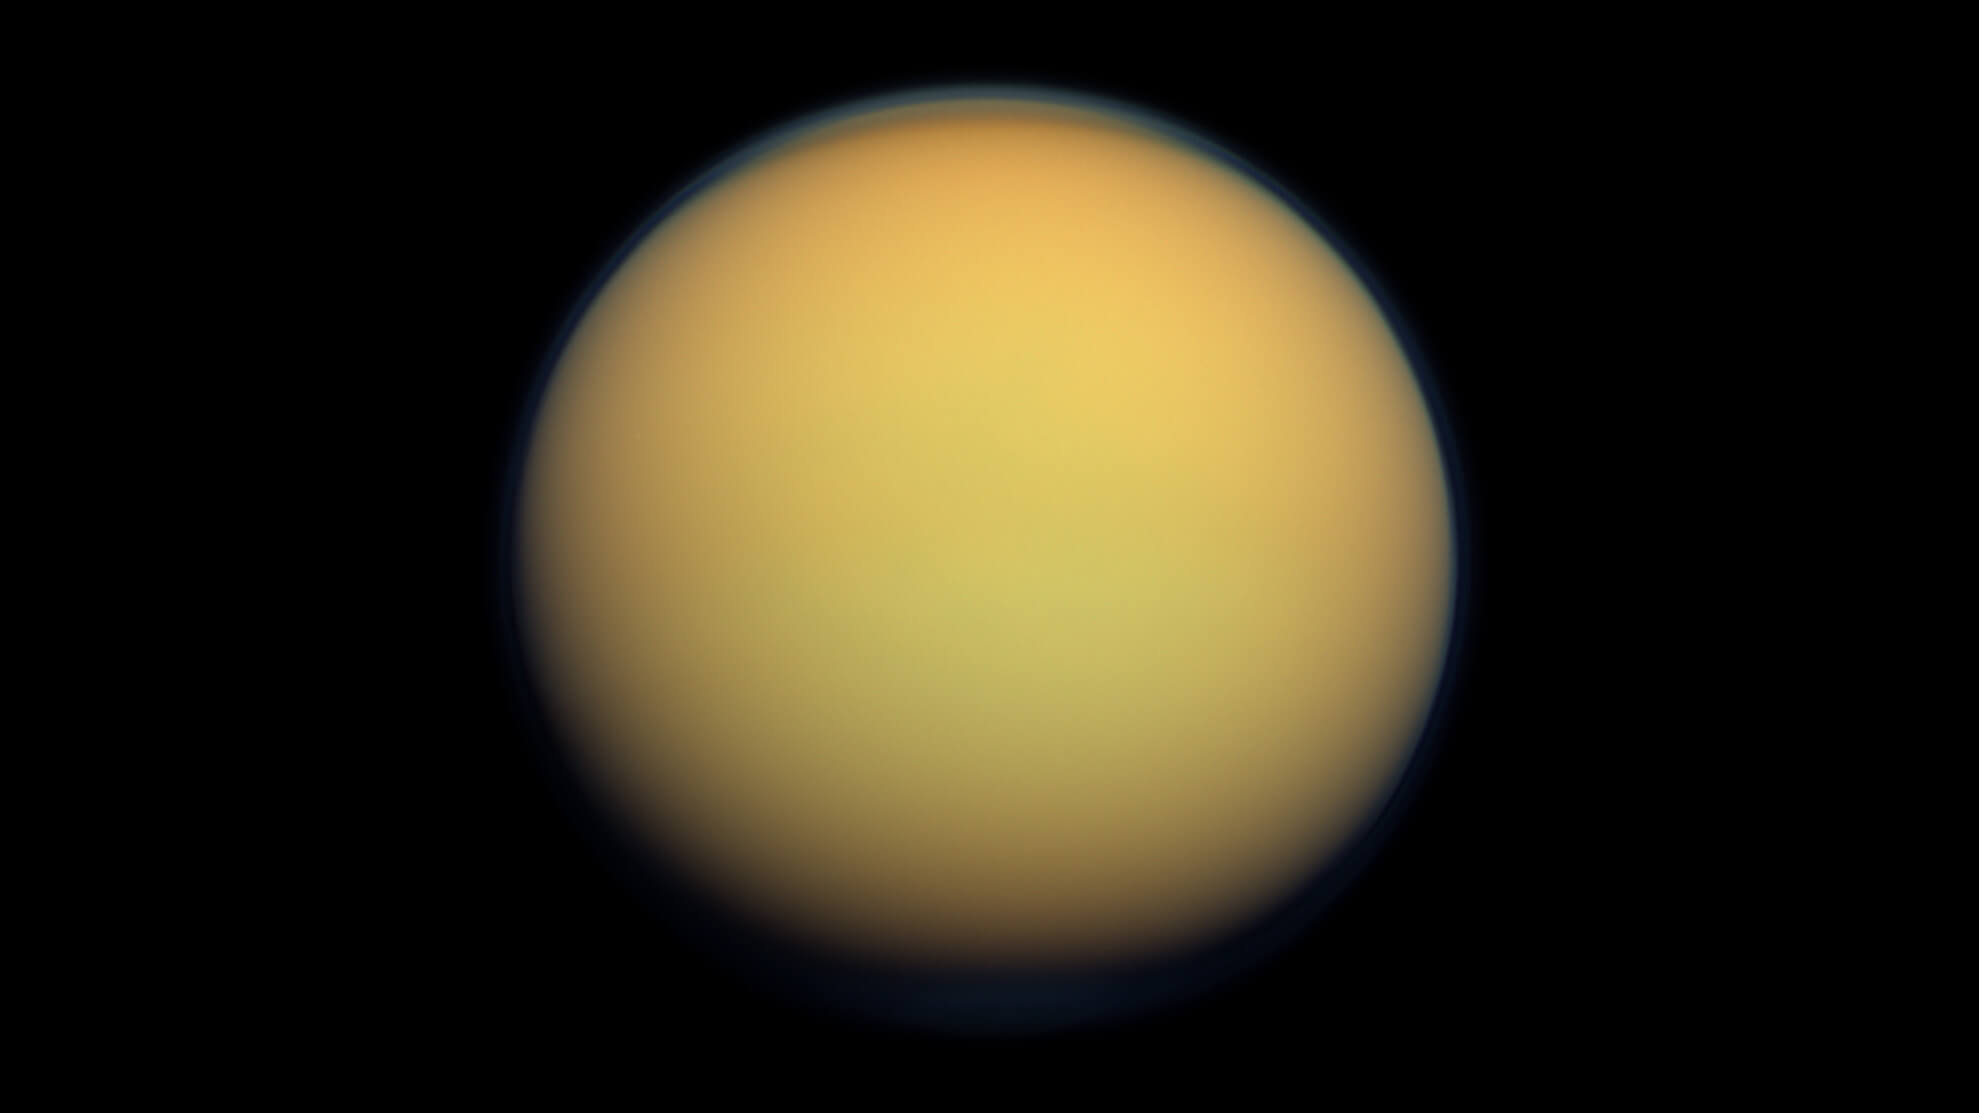 Спутник плотной атмосферой. Титан Спутник Сатурна. Титан Спутник спутники Сатурна. Титан Луна Сатурна. Сатурн Планета Спутник Сатурна Титан.